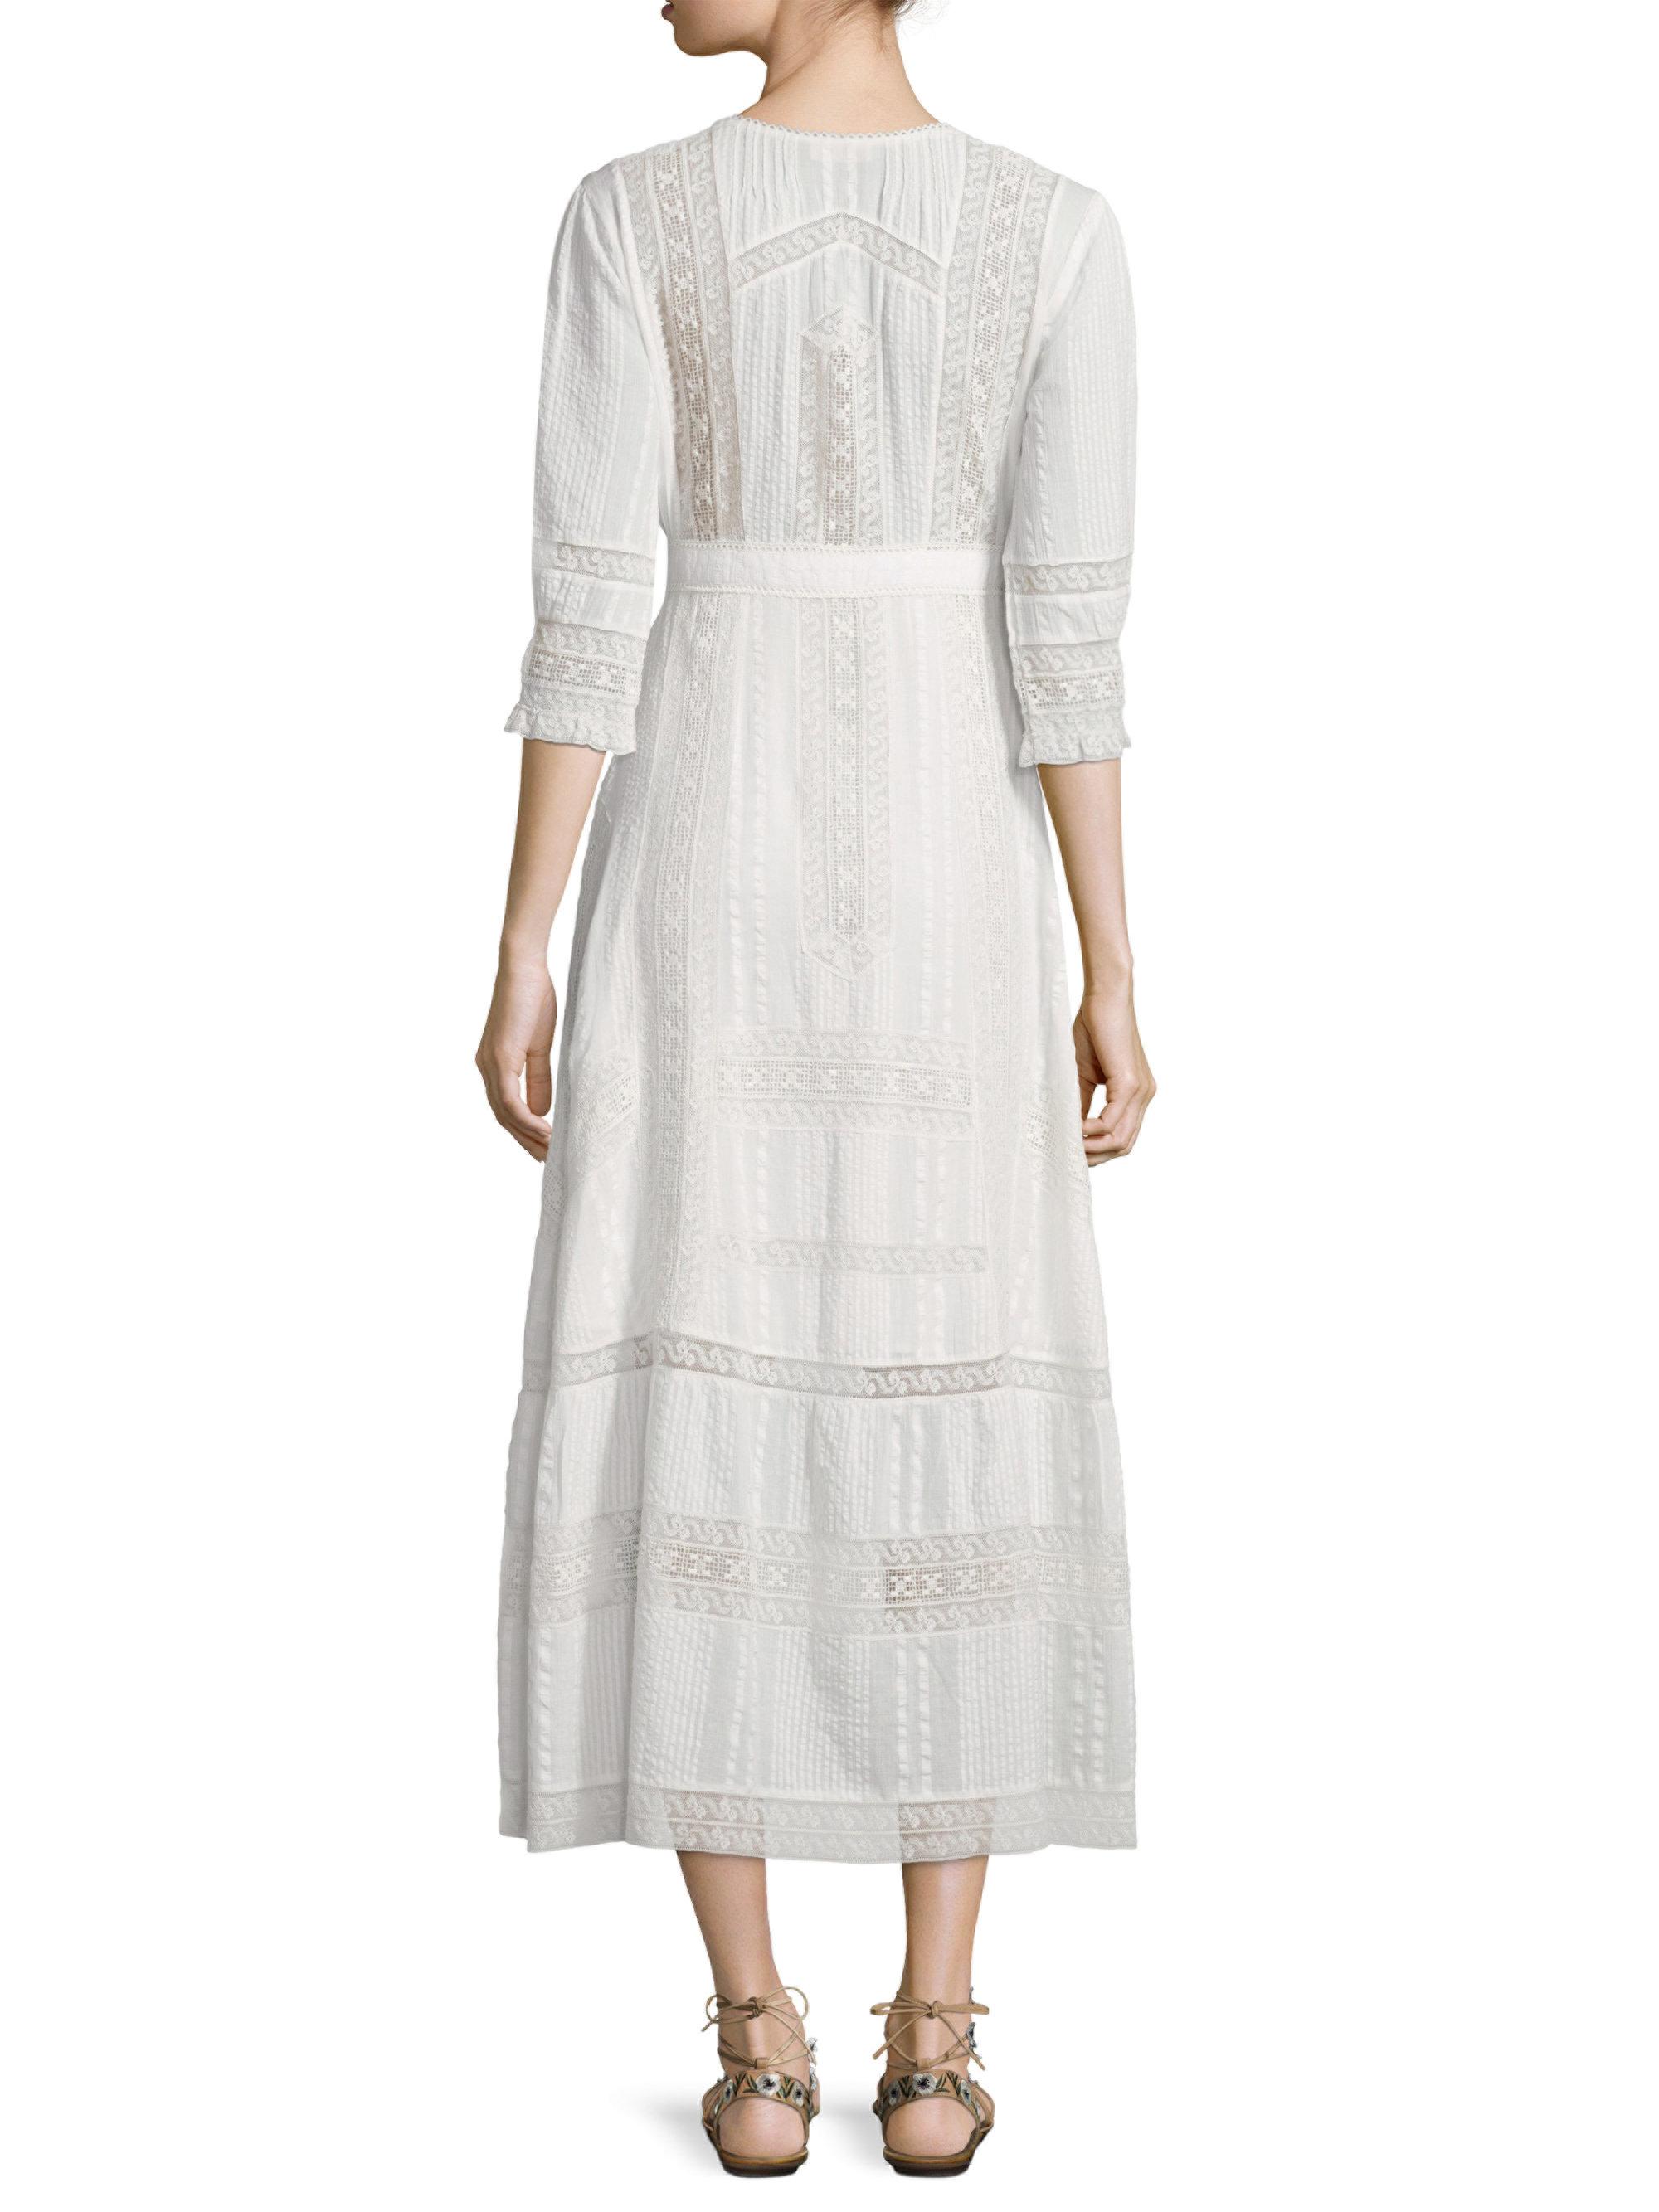 LoveShackFancy Desert Victorian Maxi Dress in White - Lyst